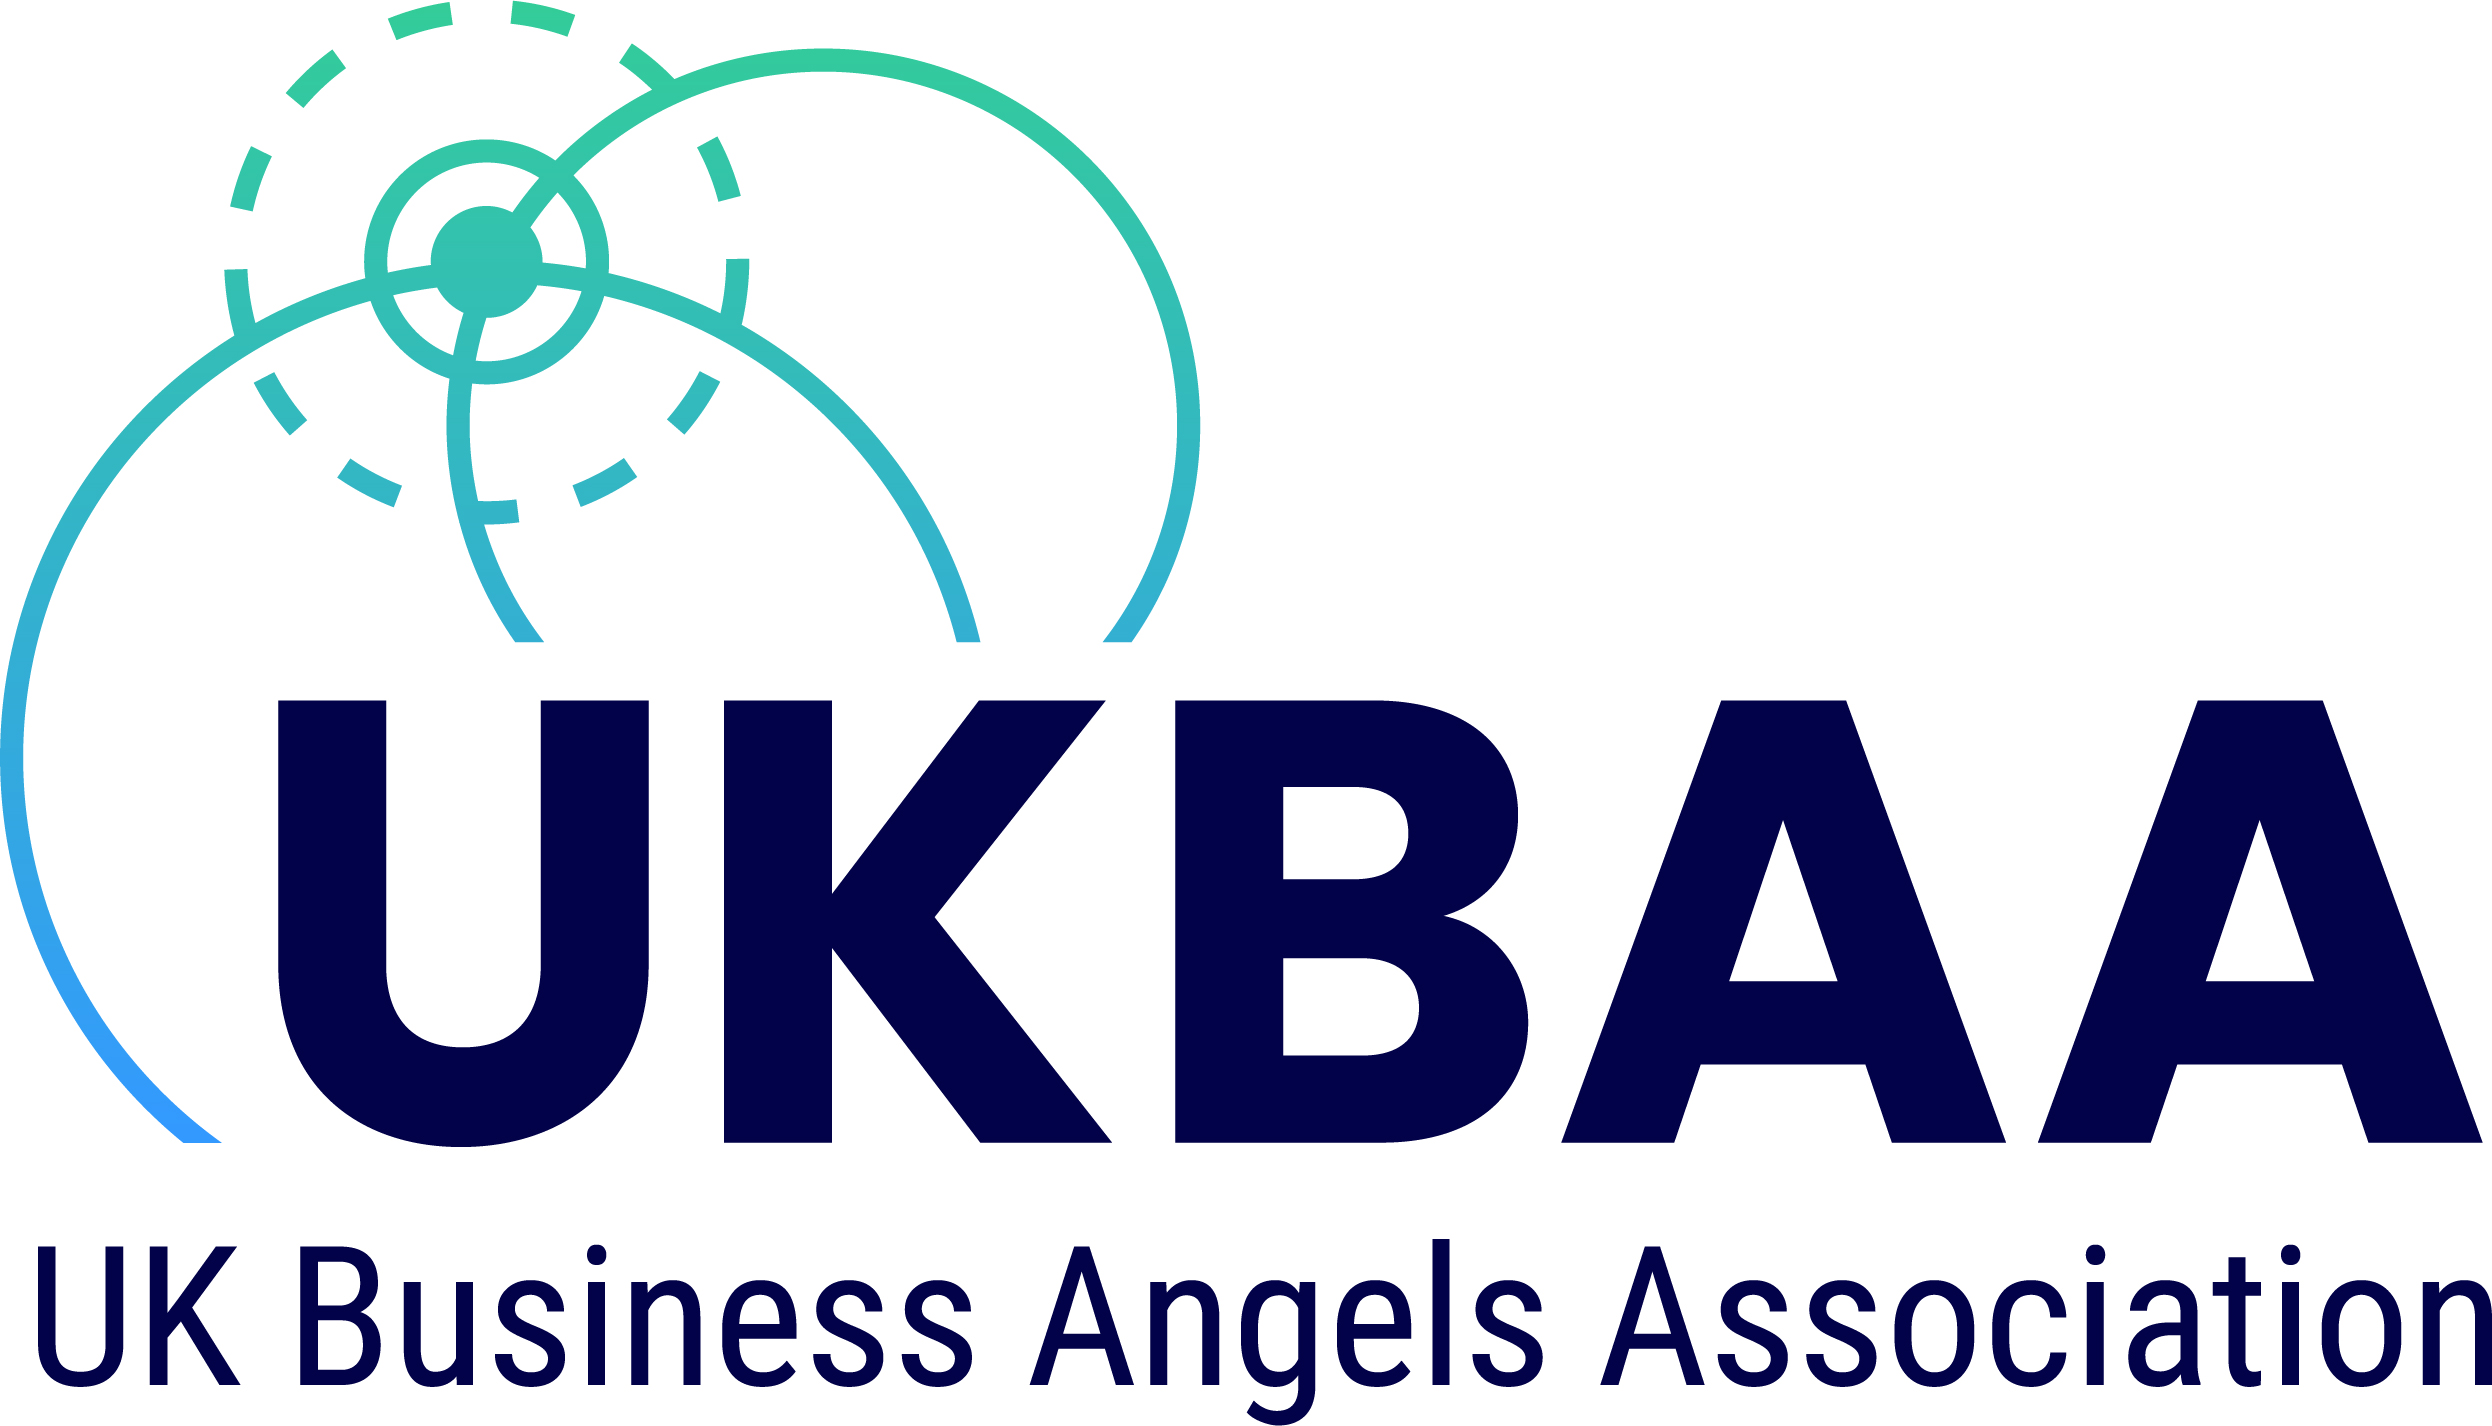 UK Business Angels Association (UKBAA) <br>